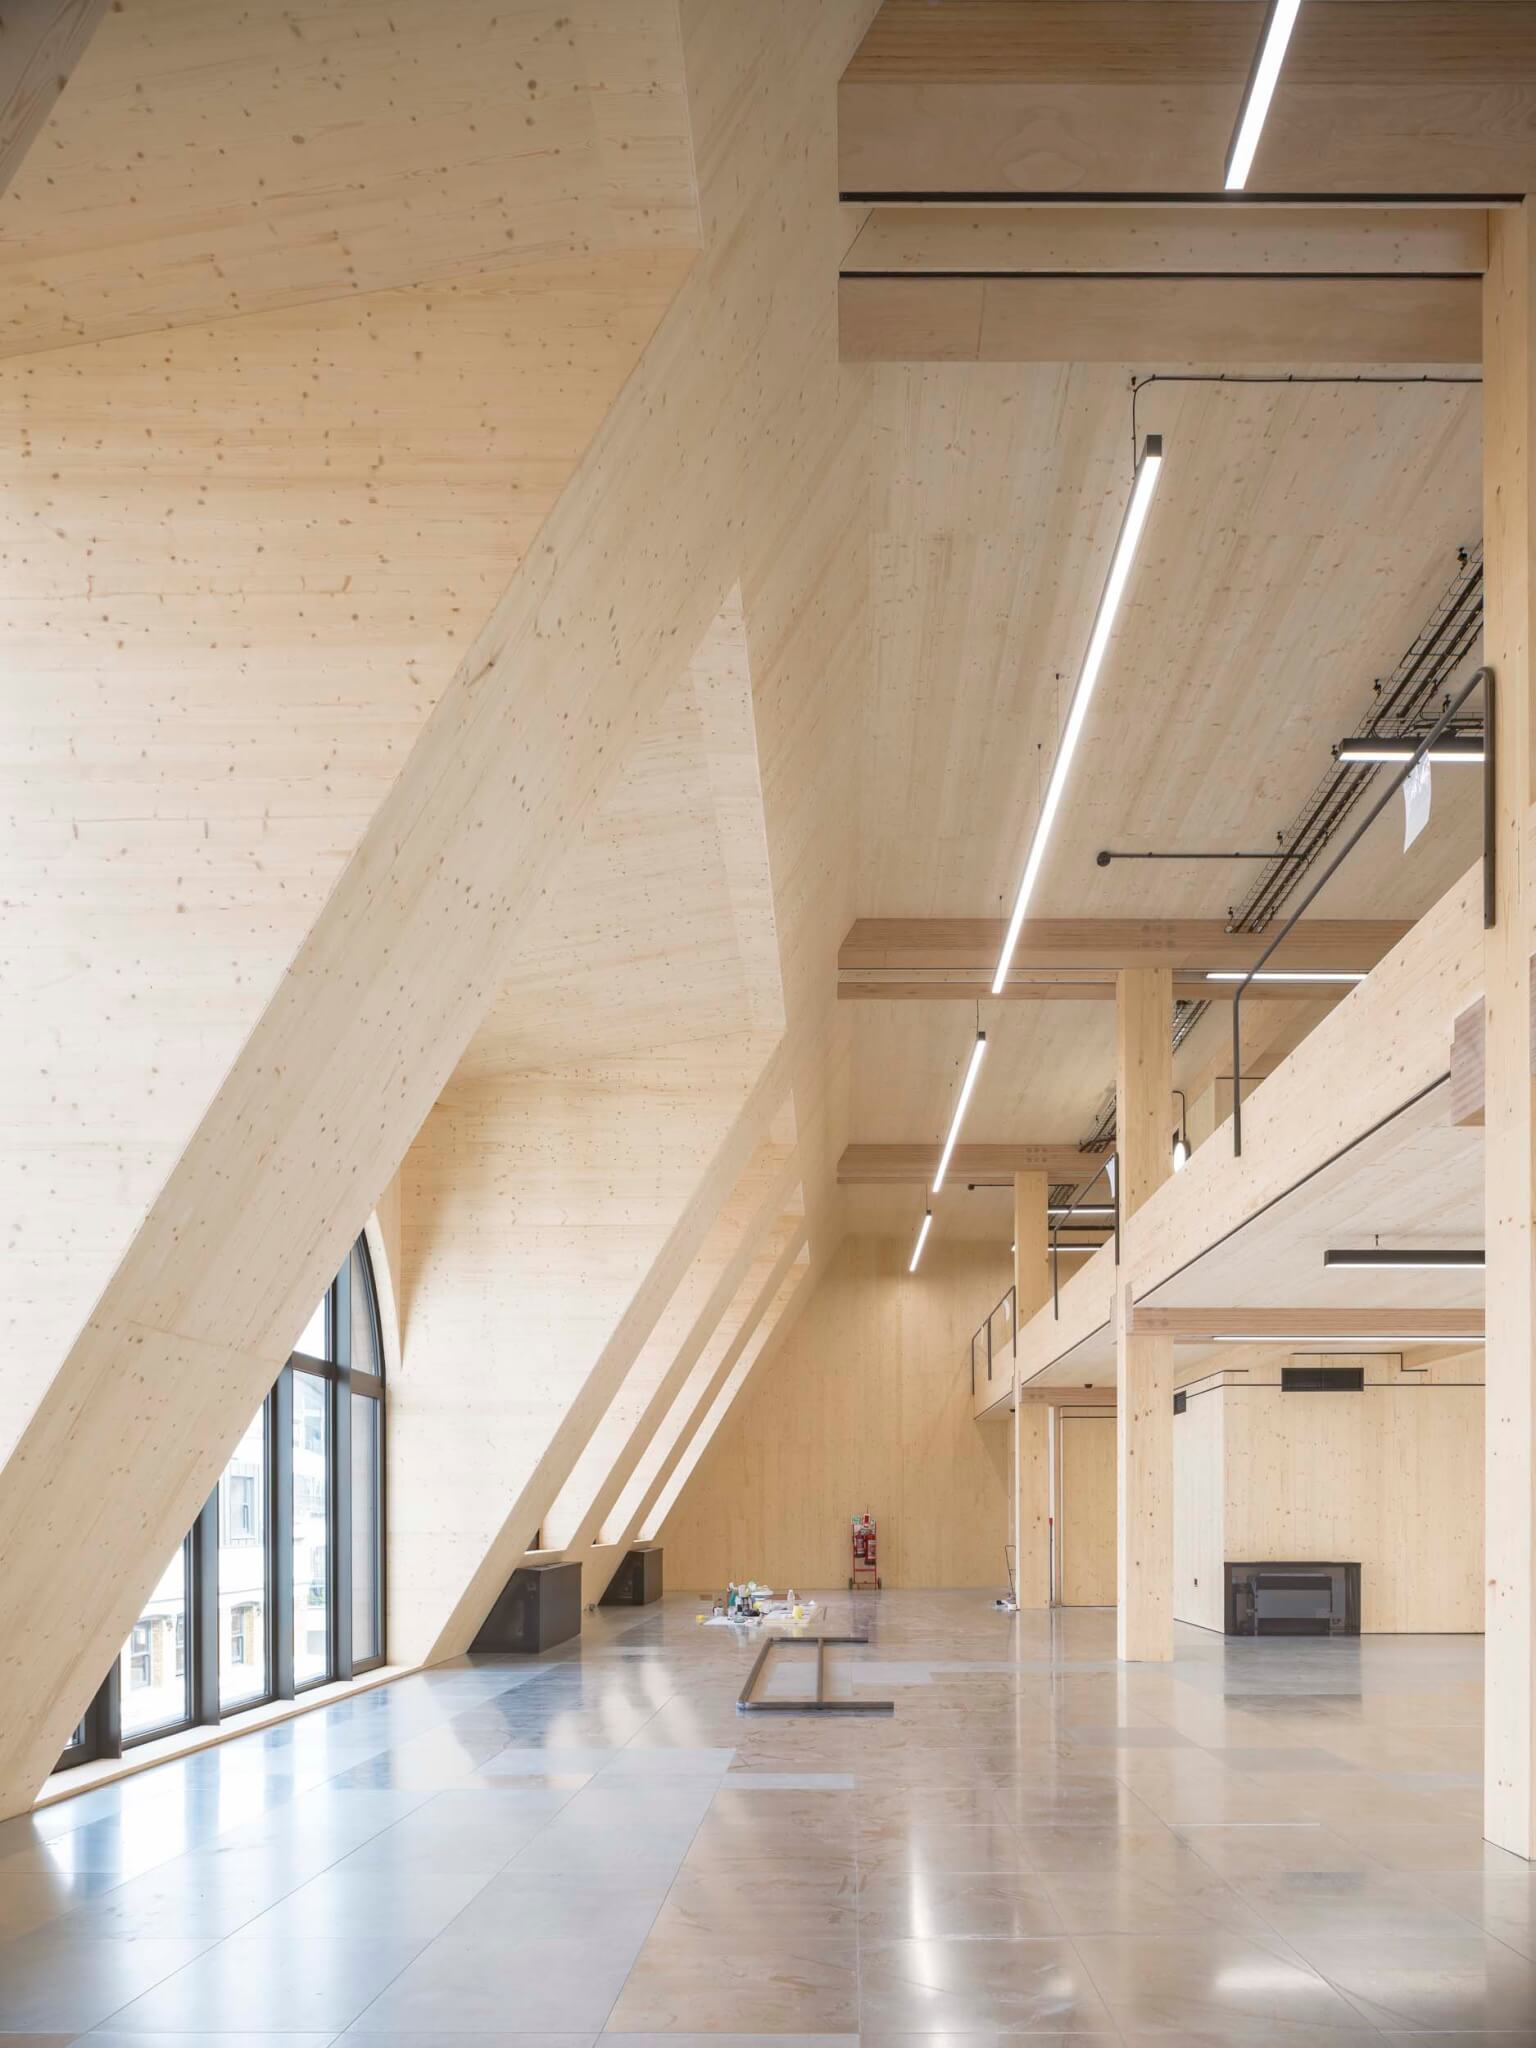 Cross-laminated timber interiors